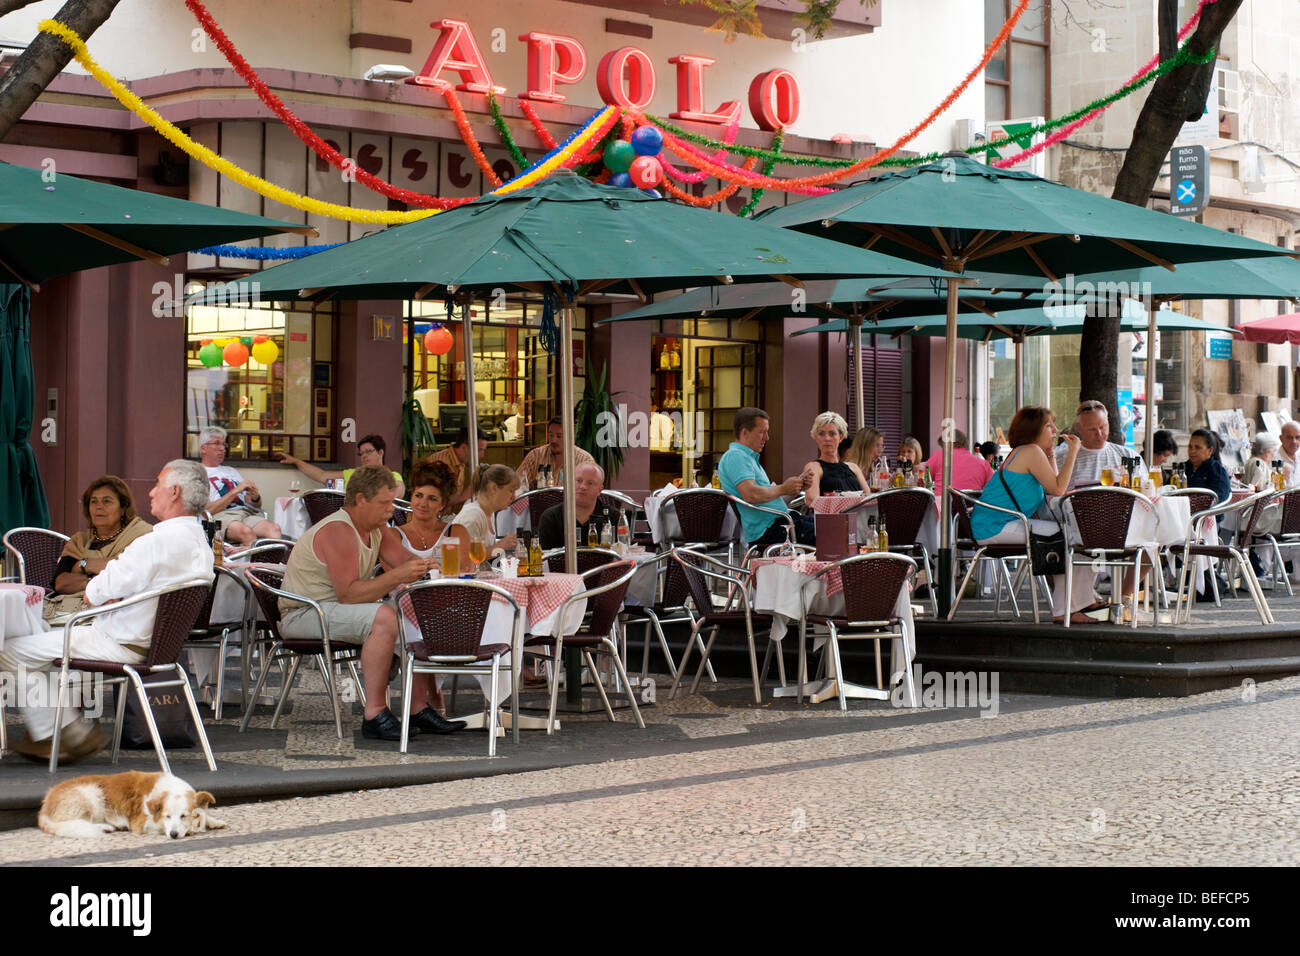 The Apolo restaurant on Rua Dr Antonio Jose D'Almeida in Funchal, Madeira. Stock Photo